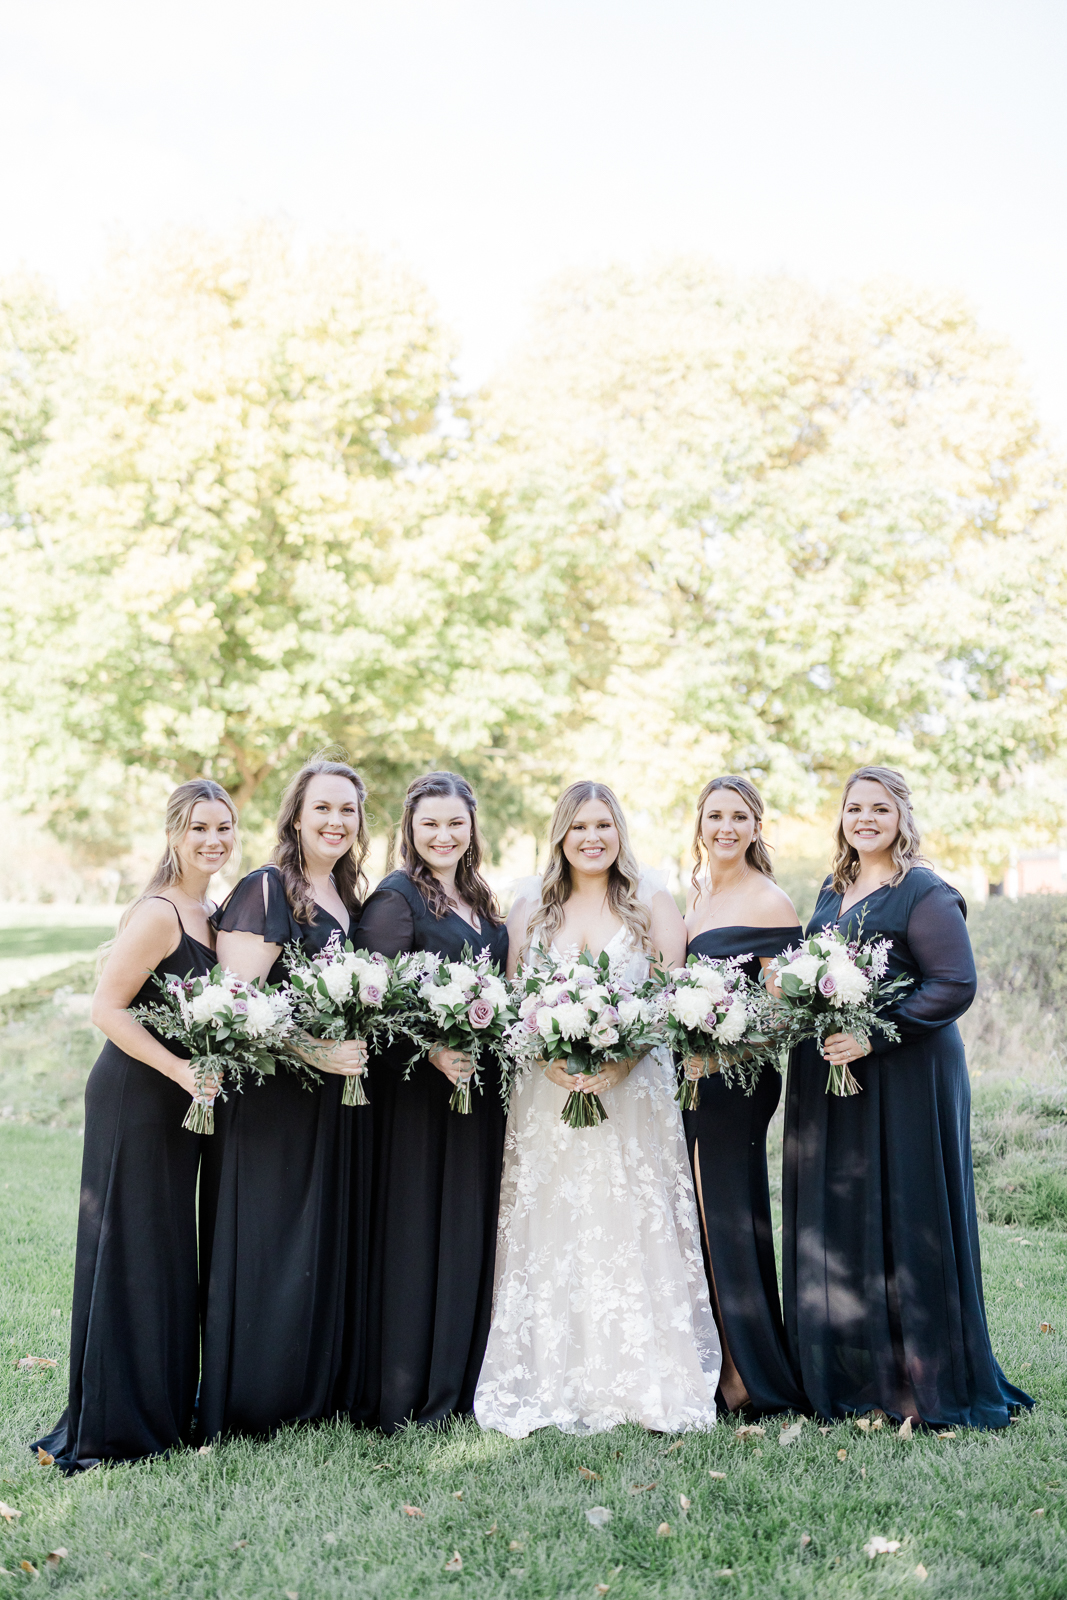 bride and bridesmaids in black dresses